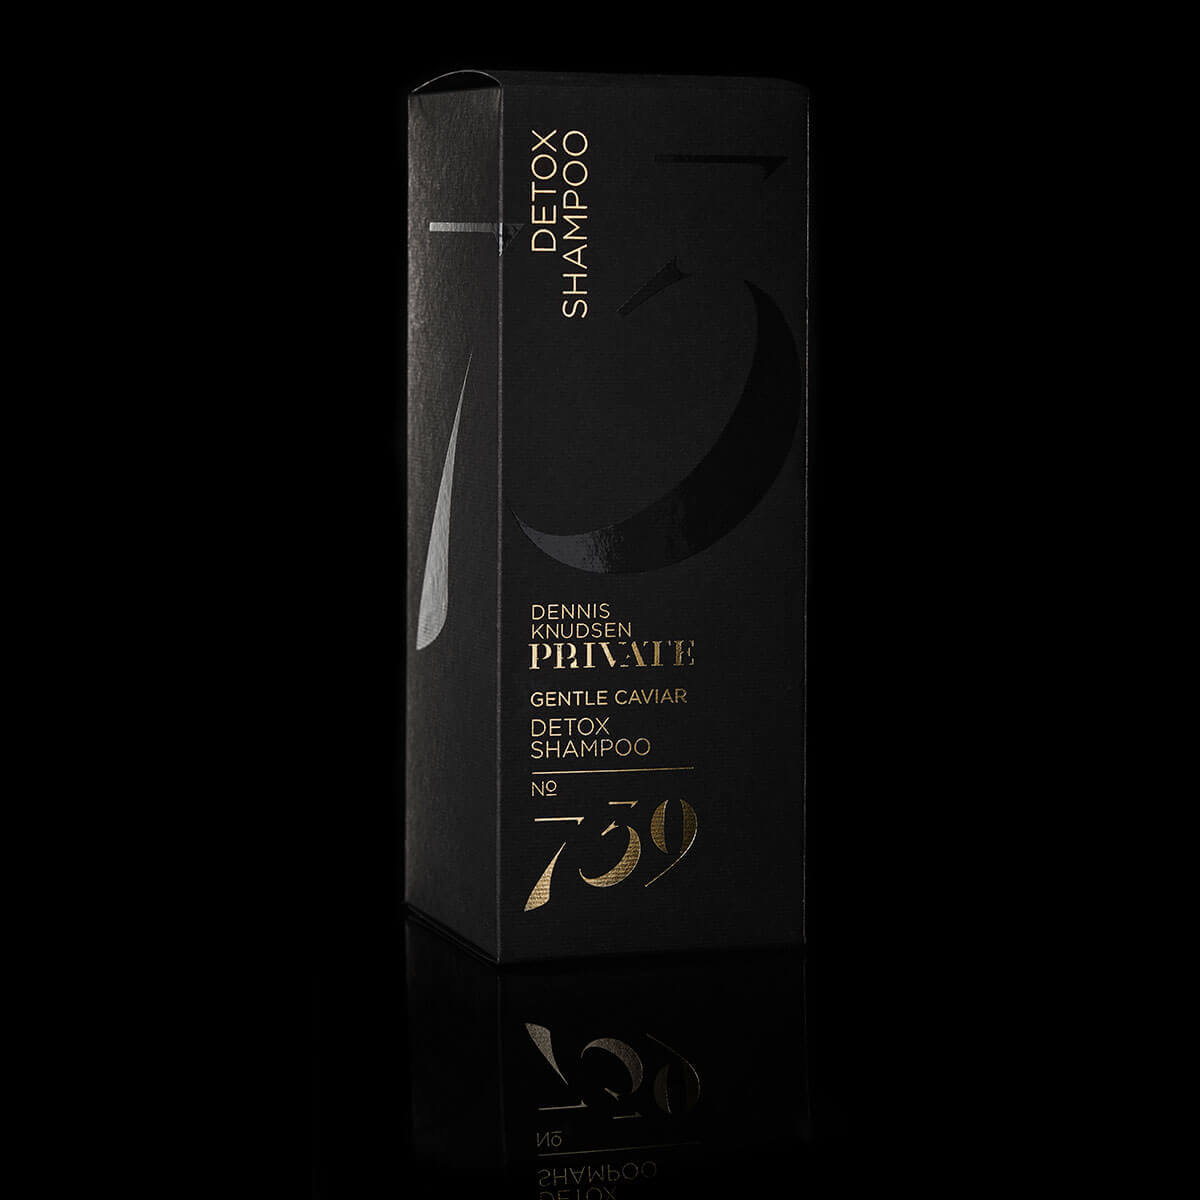 gentle caviar detox shampoo 739 dennis knudsen private box side